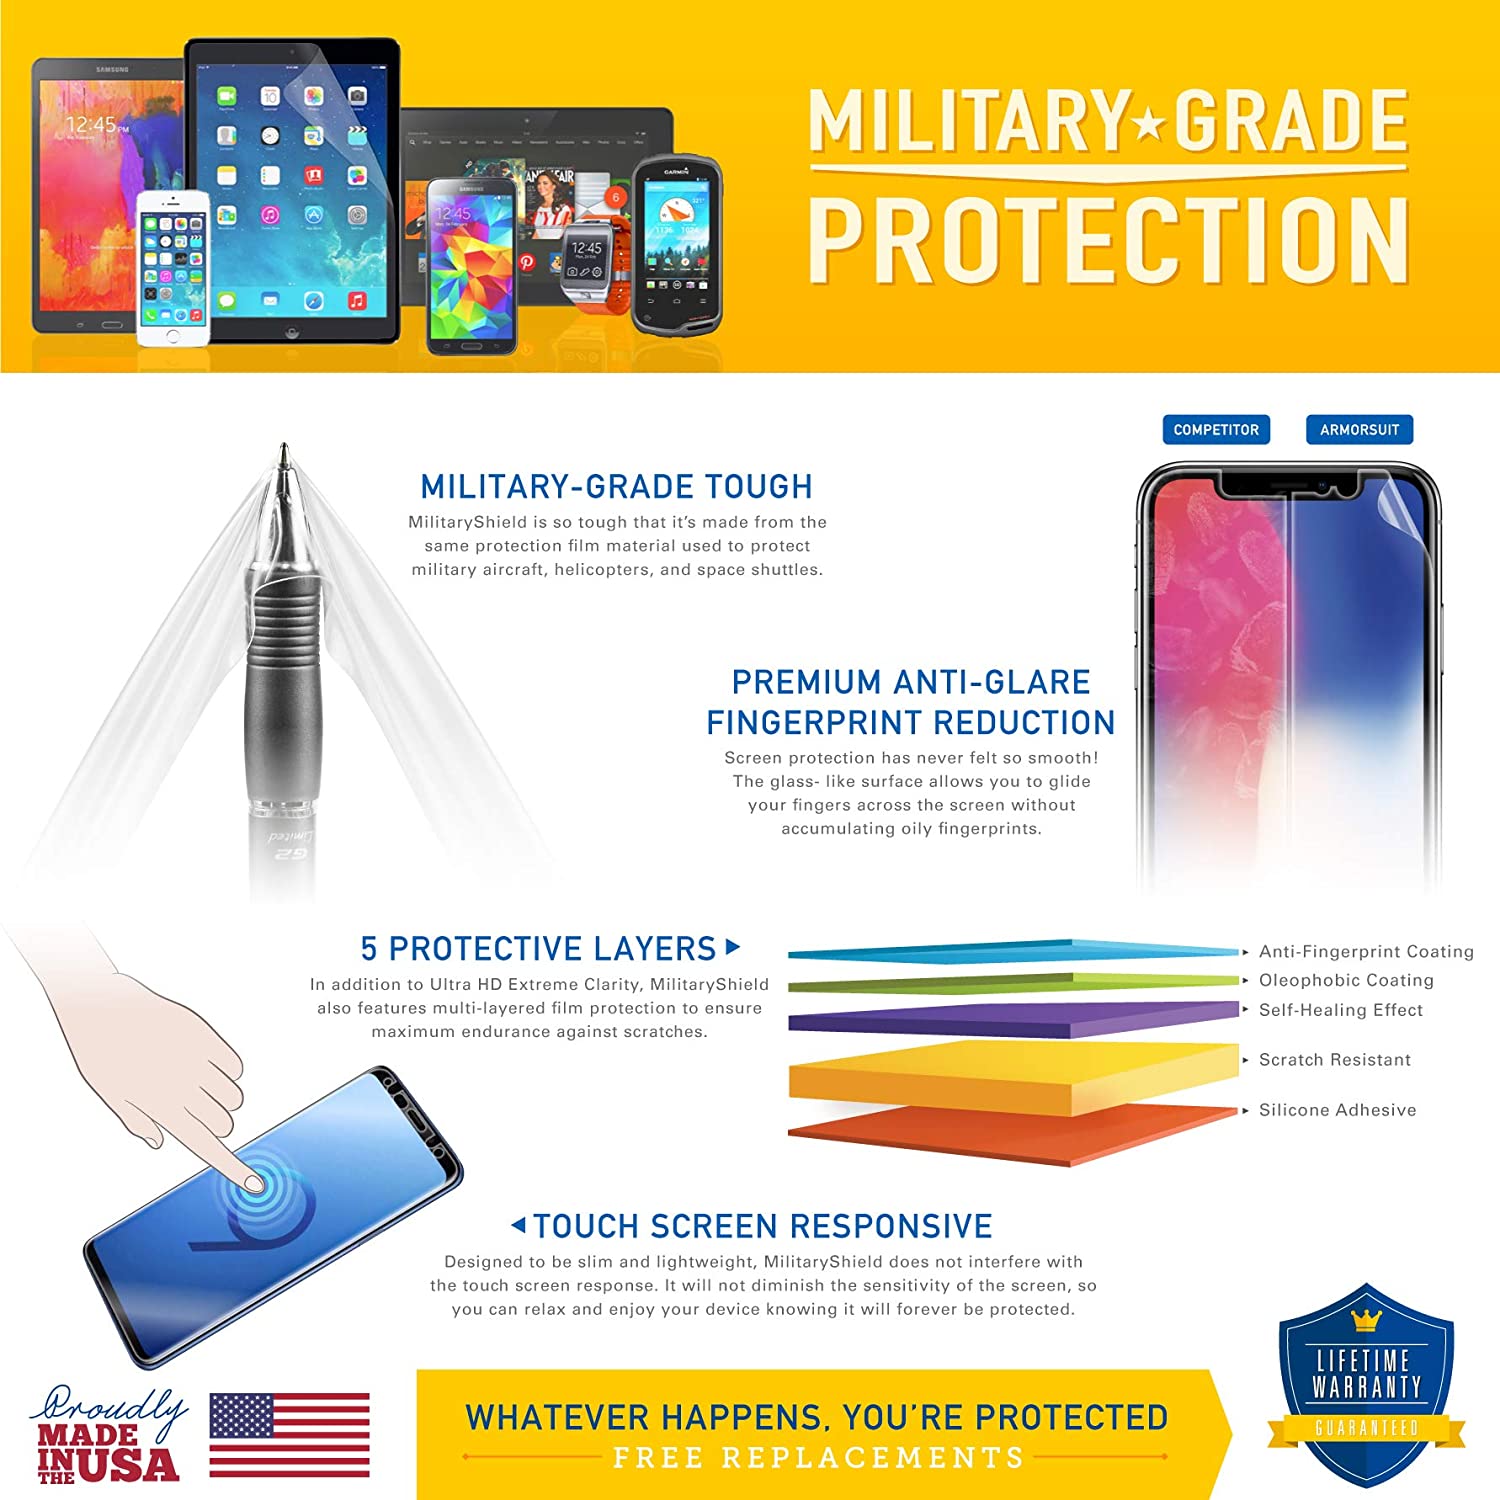 Samsung Galaxy S8 Plus Full Body Skin Protector